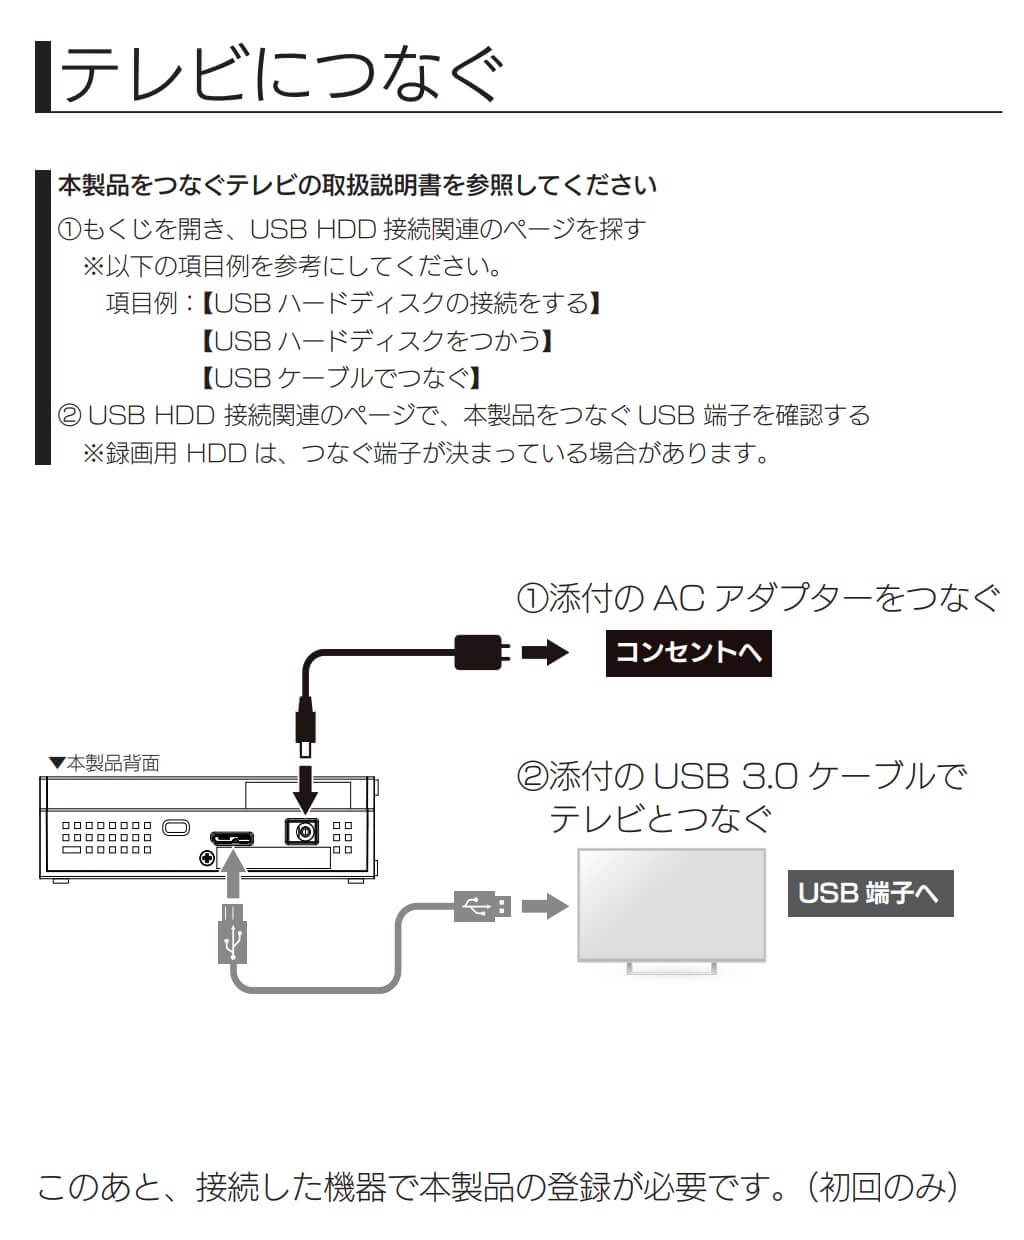 HDCZ-UTL4K/Eとテレビの接続方法